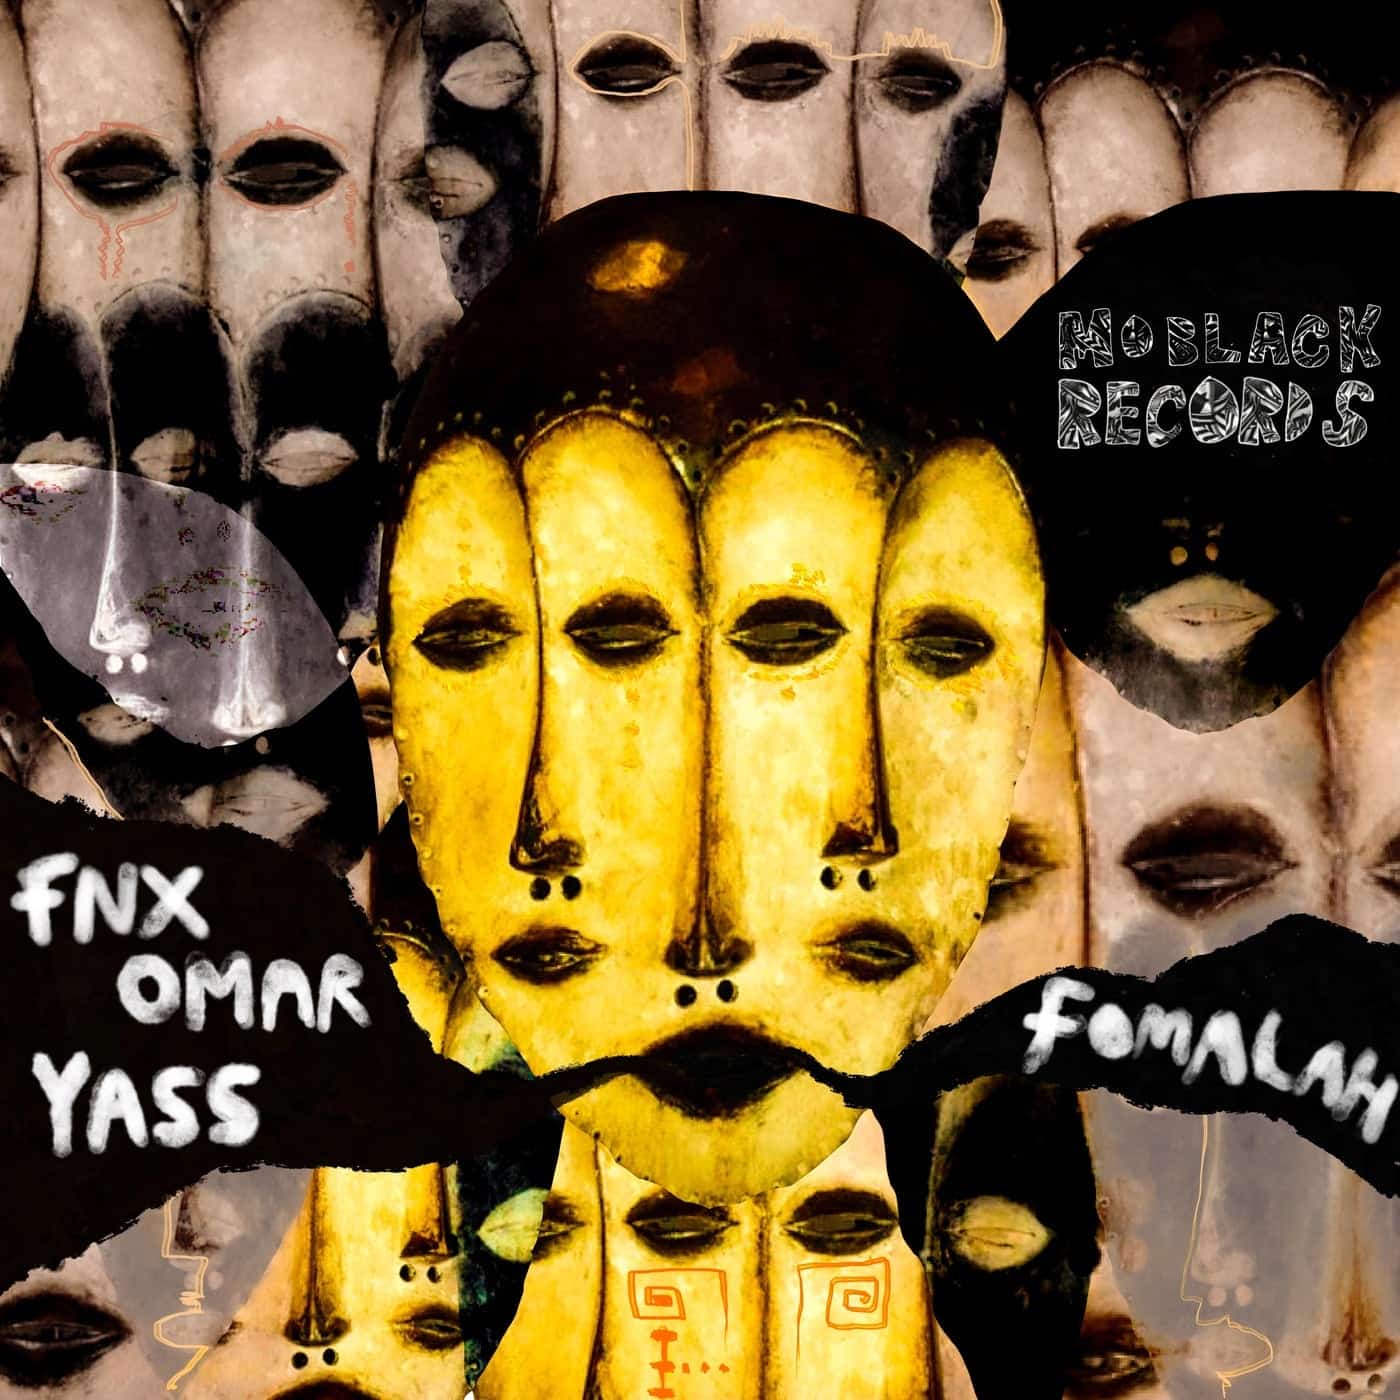 Download Yass, FNX OMAR - Fomalah on Electrobuzz